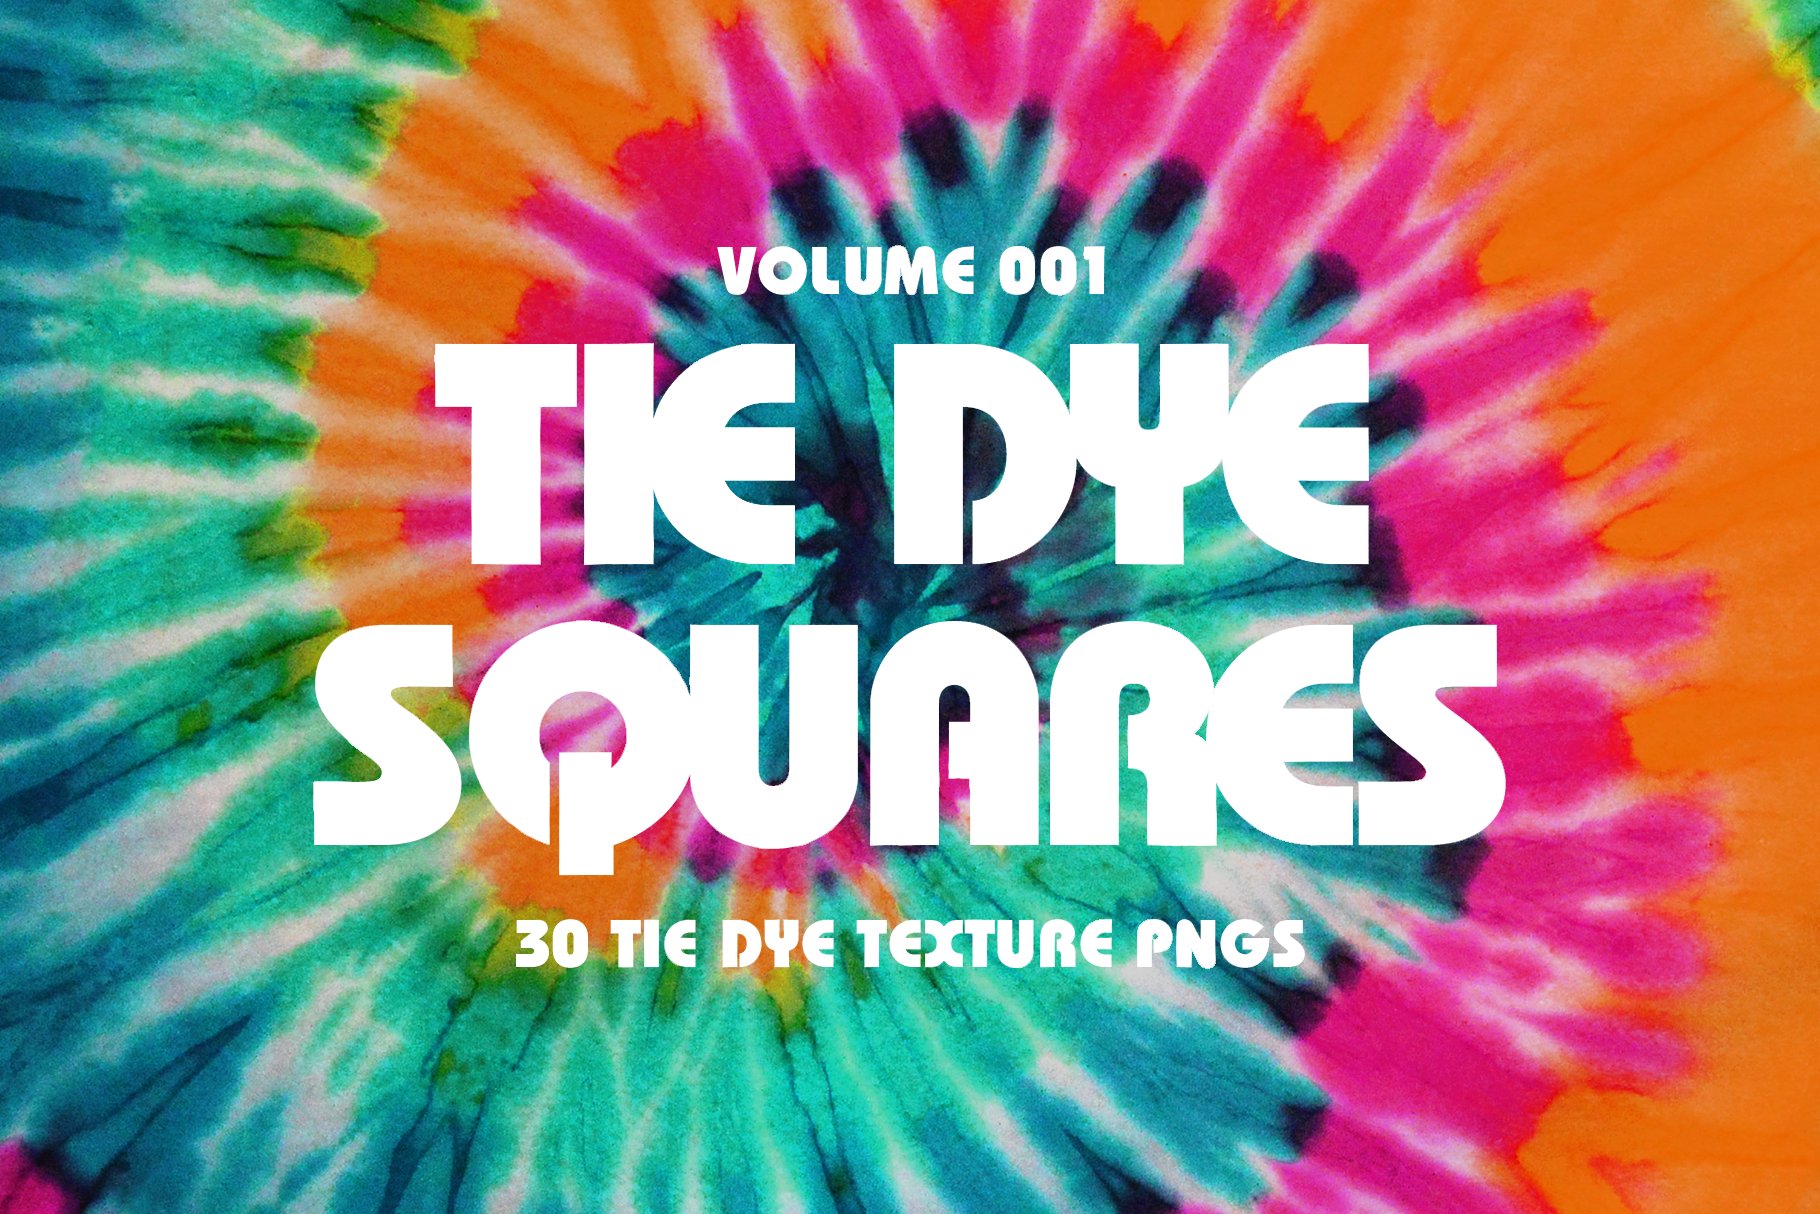 Tie Dye Squares Vol 001 cover image.